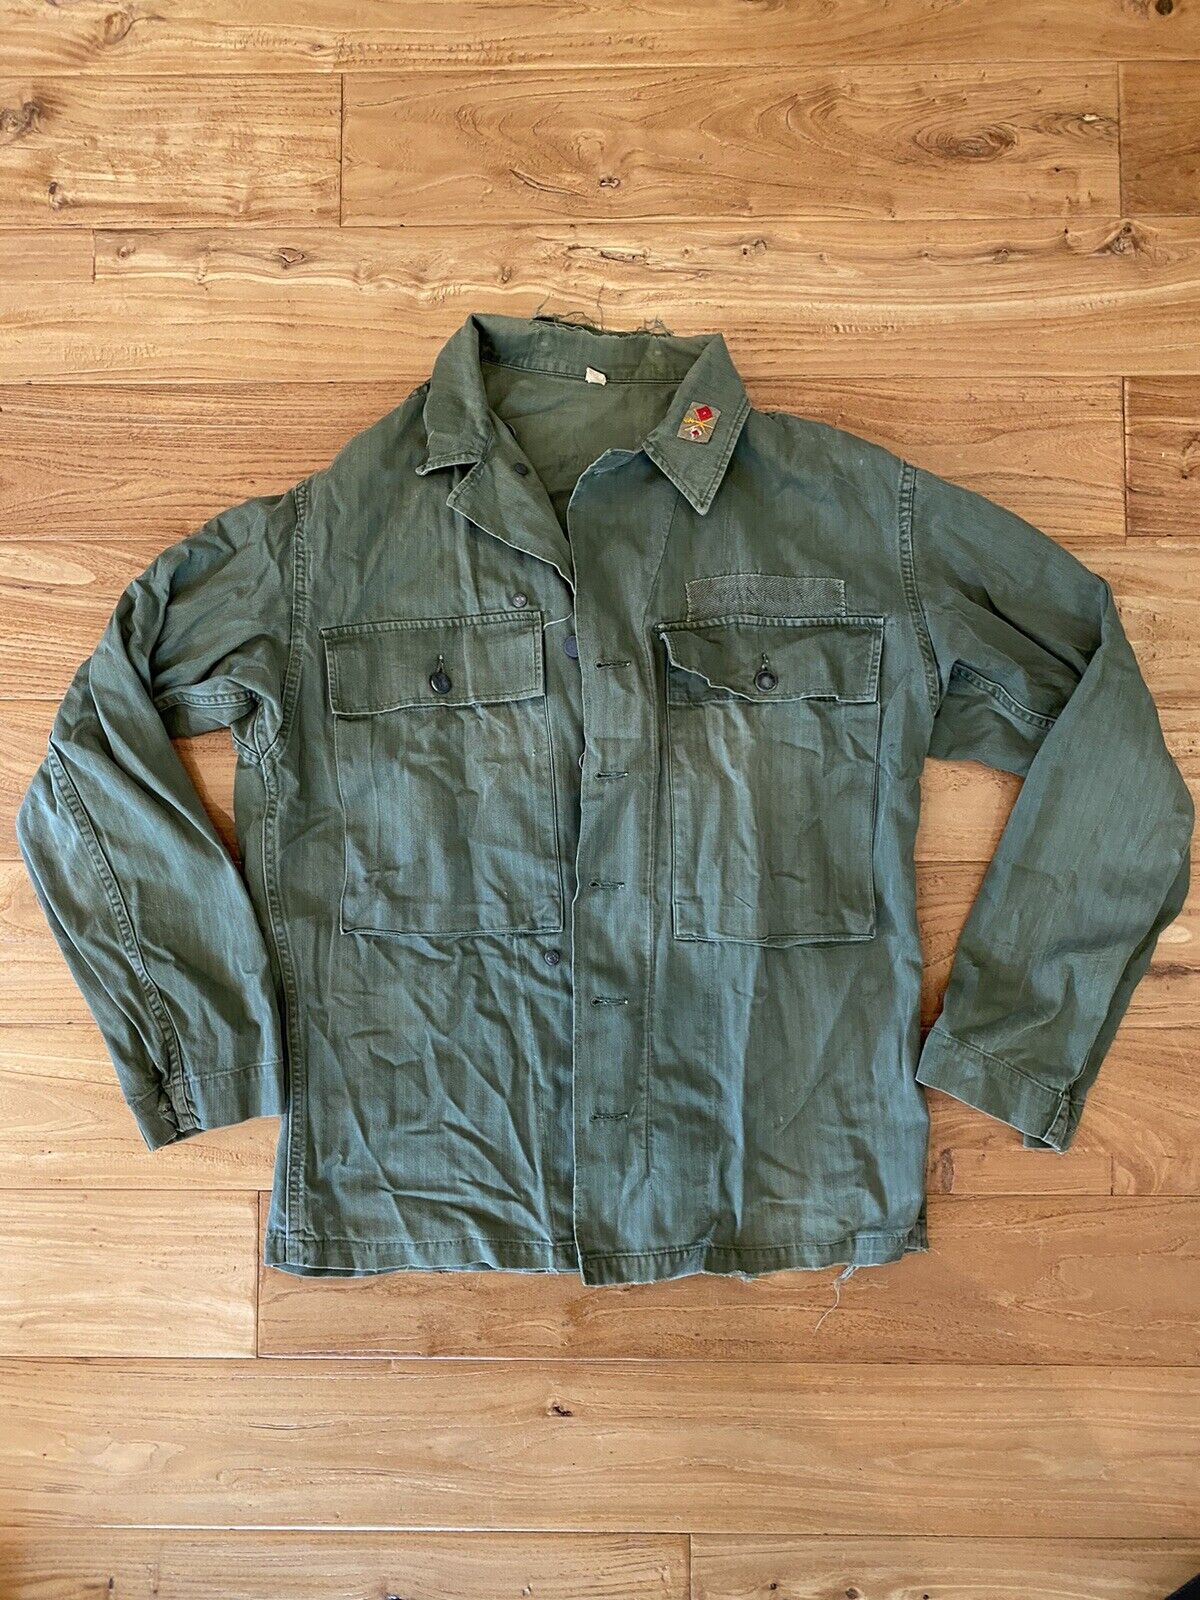 vintage army jacket 1965 large